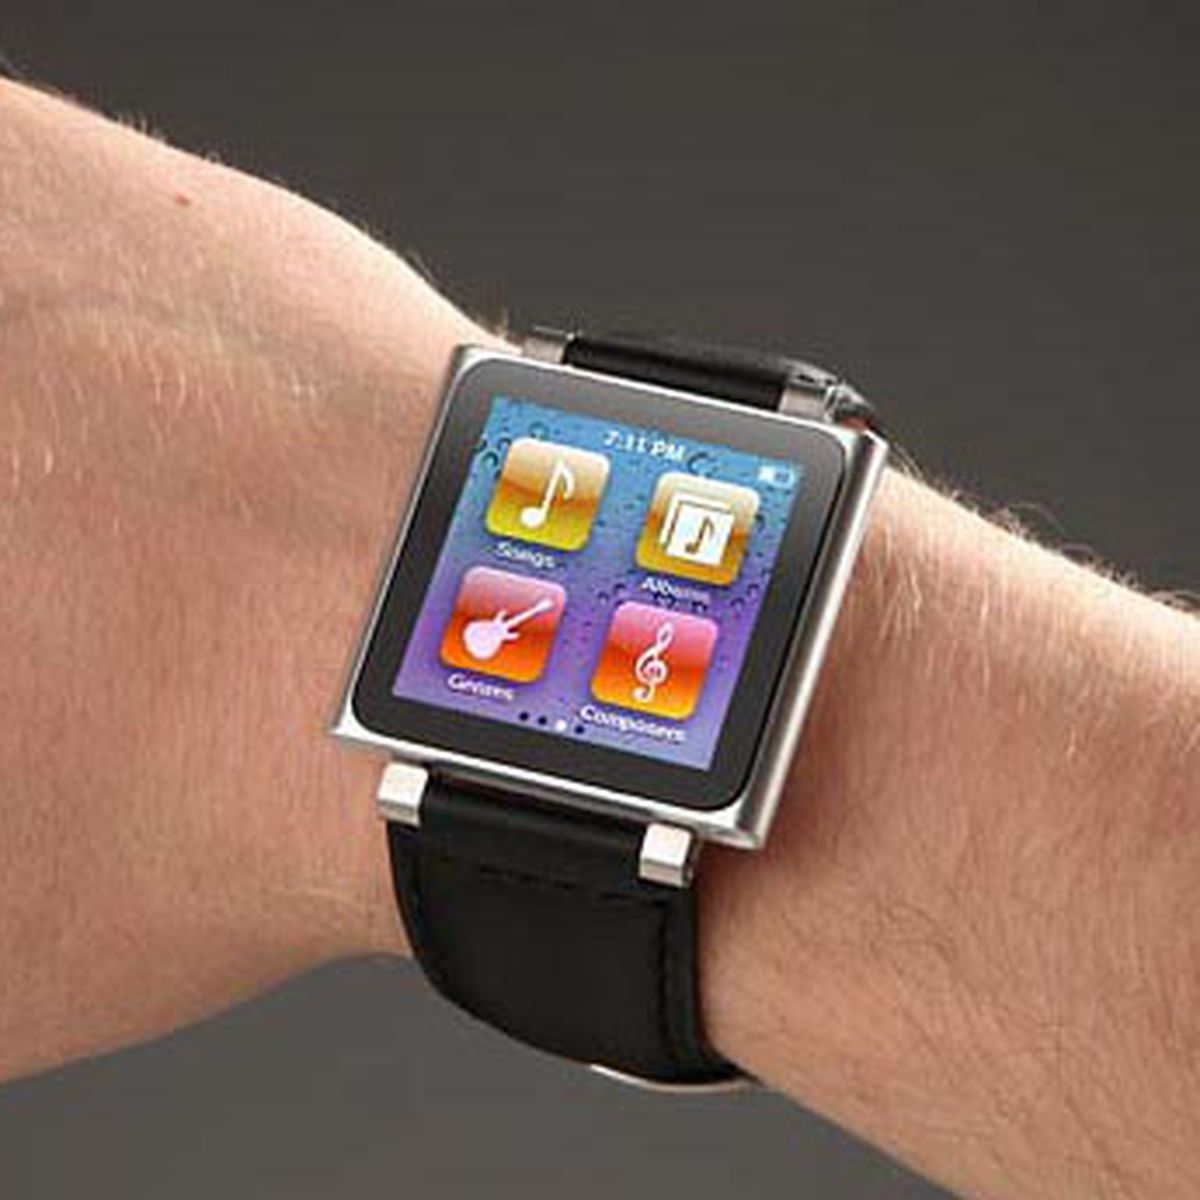 ubemandede deadlock national flag Apple's Watch-Sized iPod Nano is Officially Obsolete - MacRumors